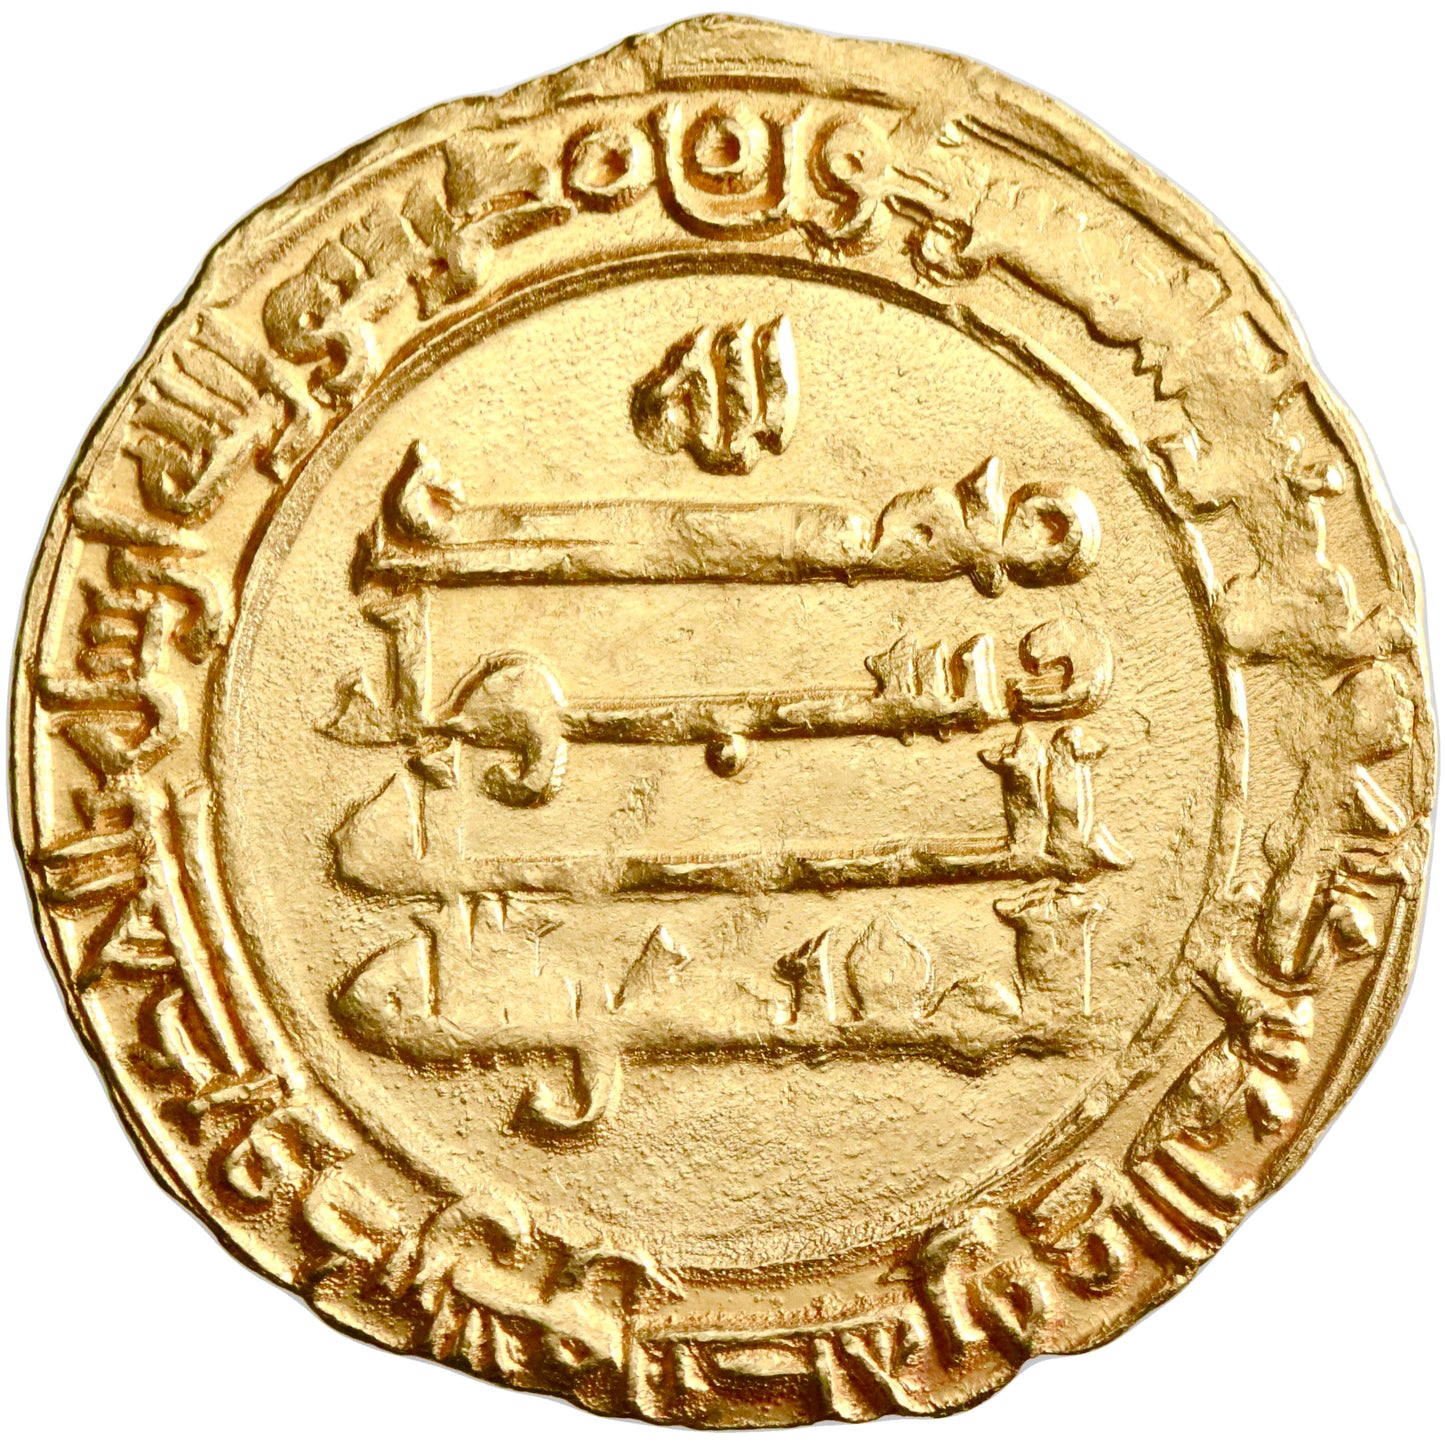 Abbasid, al-Muqtadir, gold dinar, Madinat al-Salam (Baghdad) mint, AH 309, citing Abu al-'Abbas